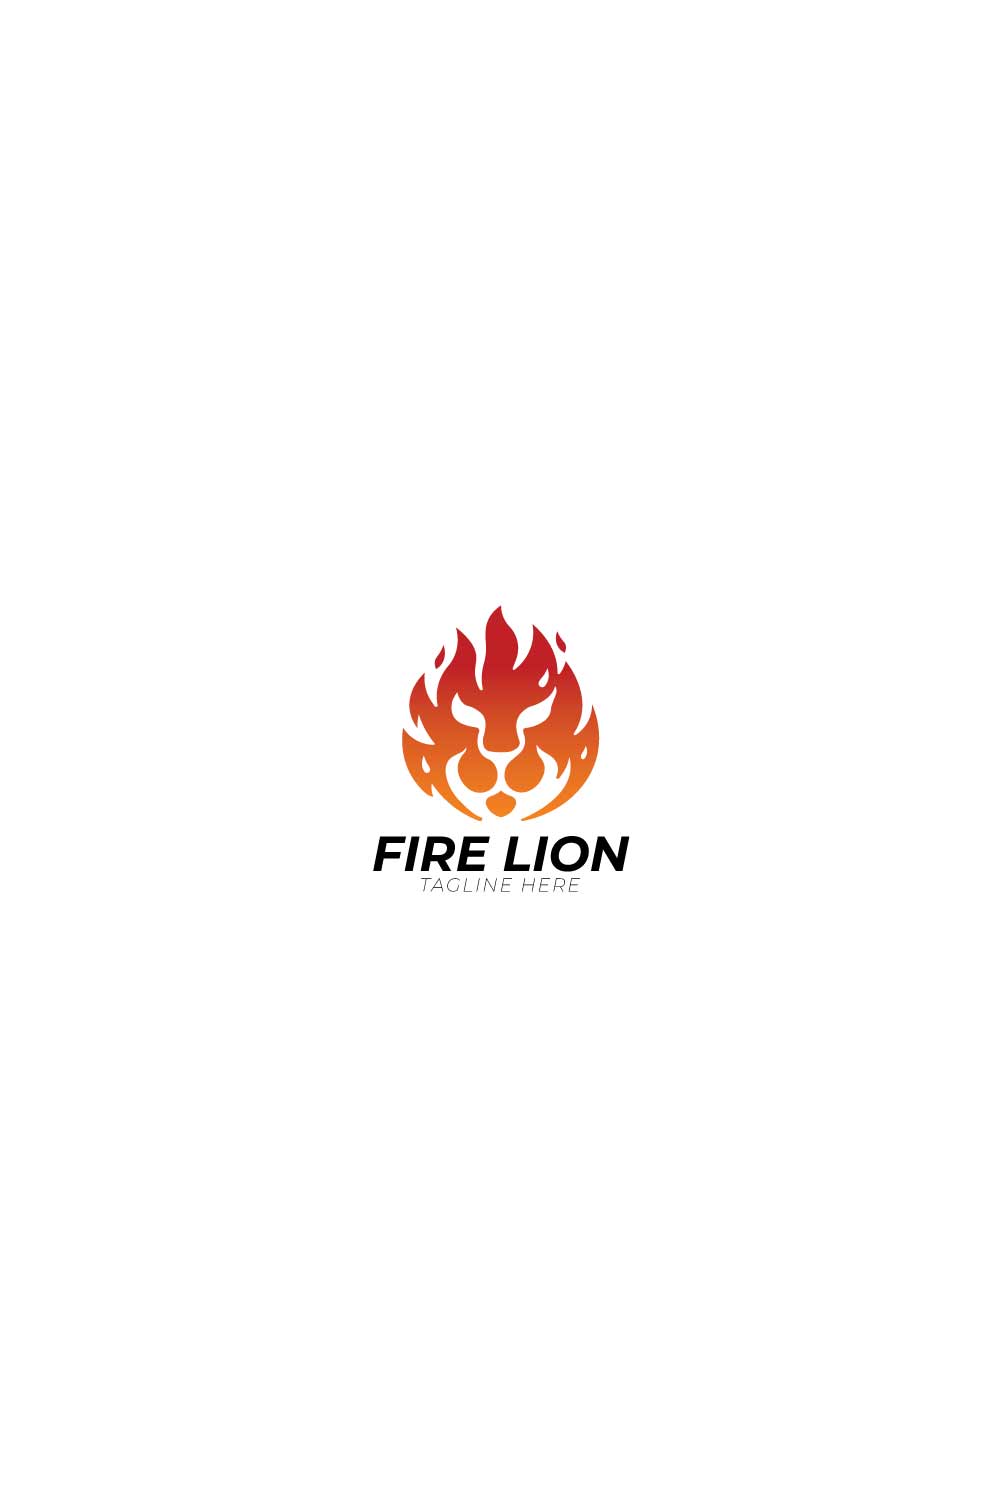 Professional Fire Lion design pinterest preview image.